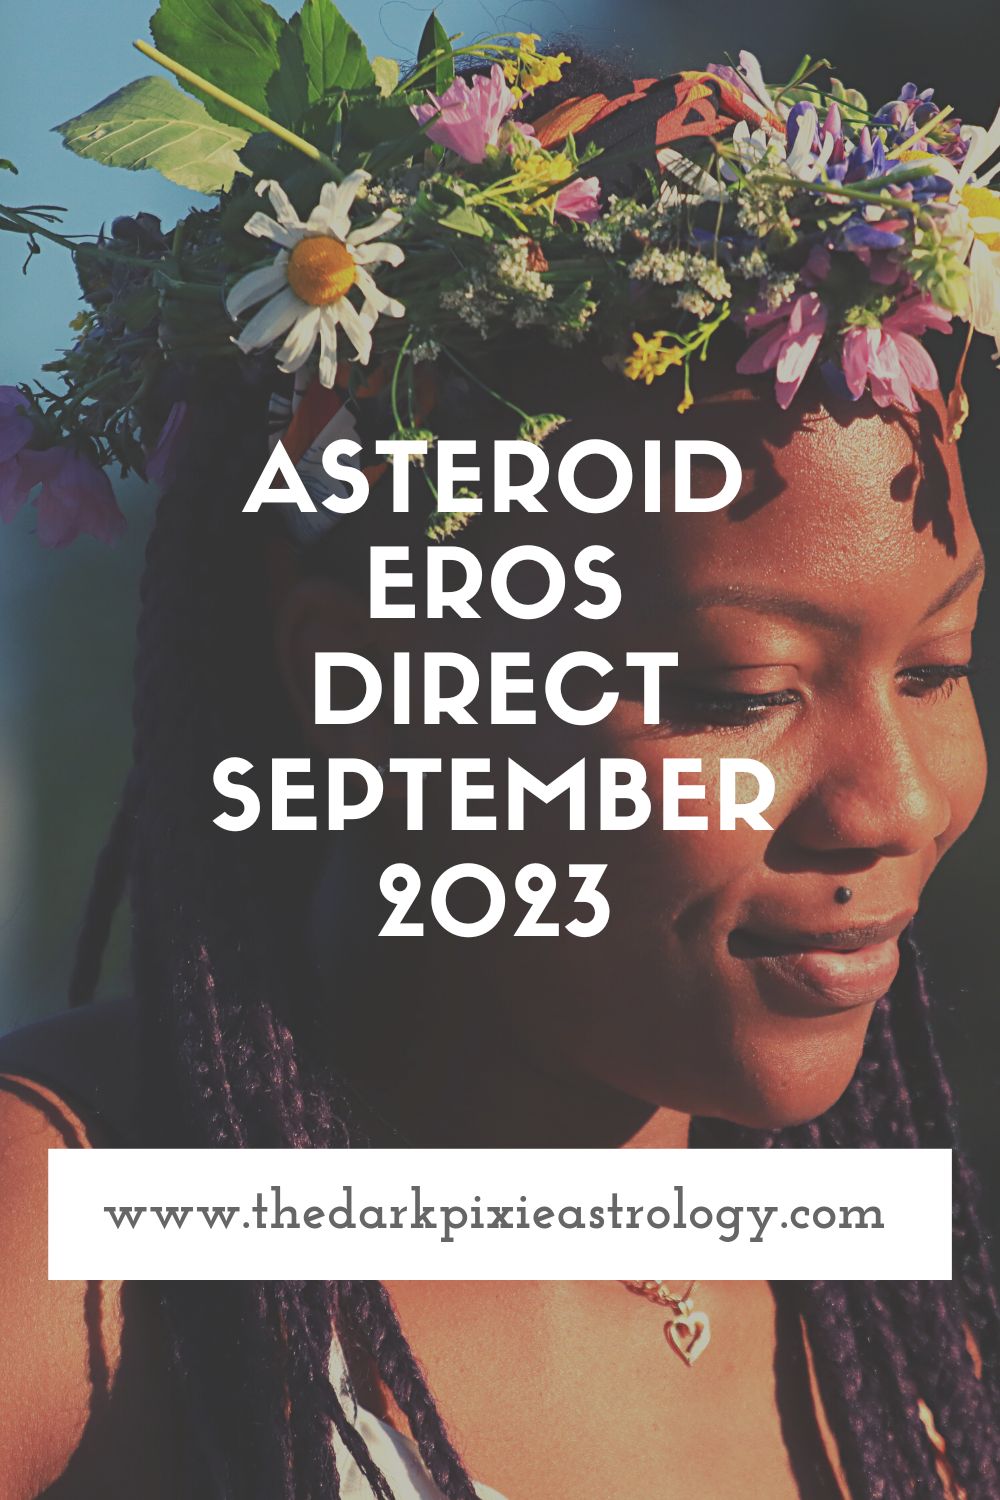 Asteroid Eros Direct September 2023 - The Dark Pixie Astrology